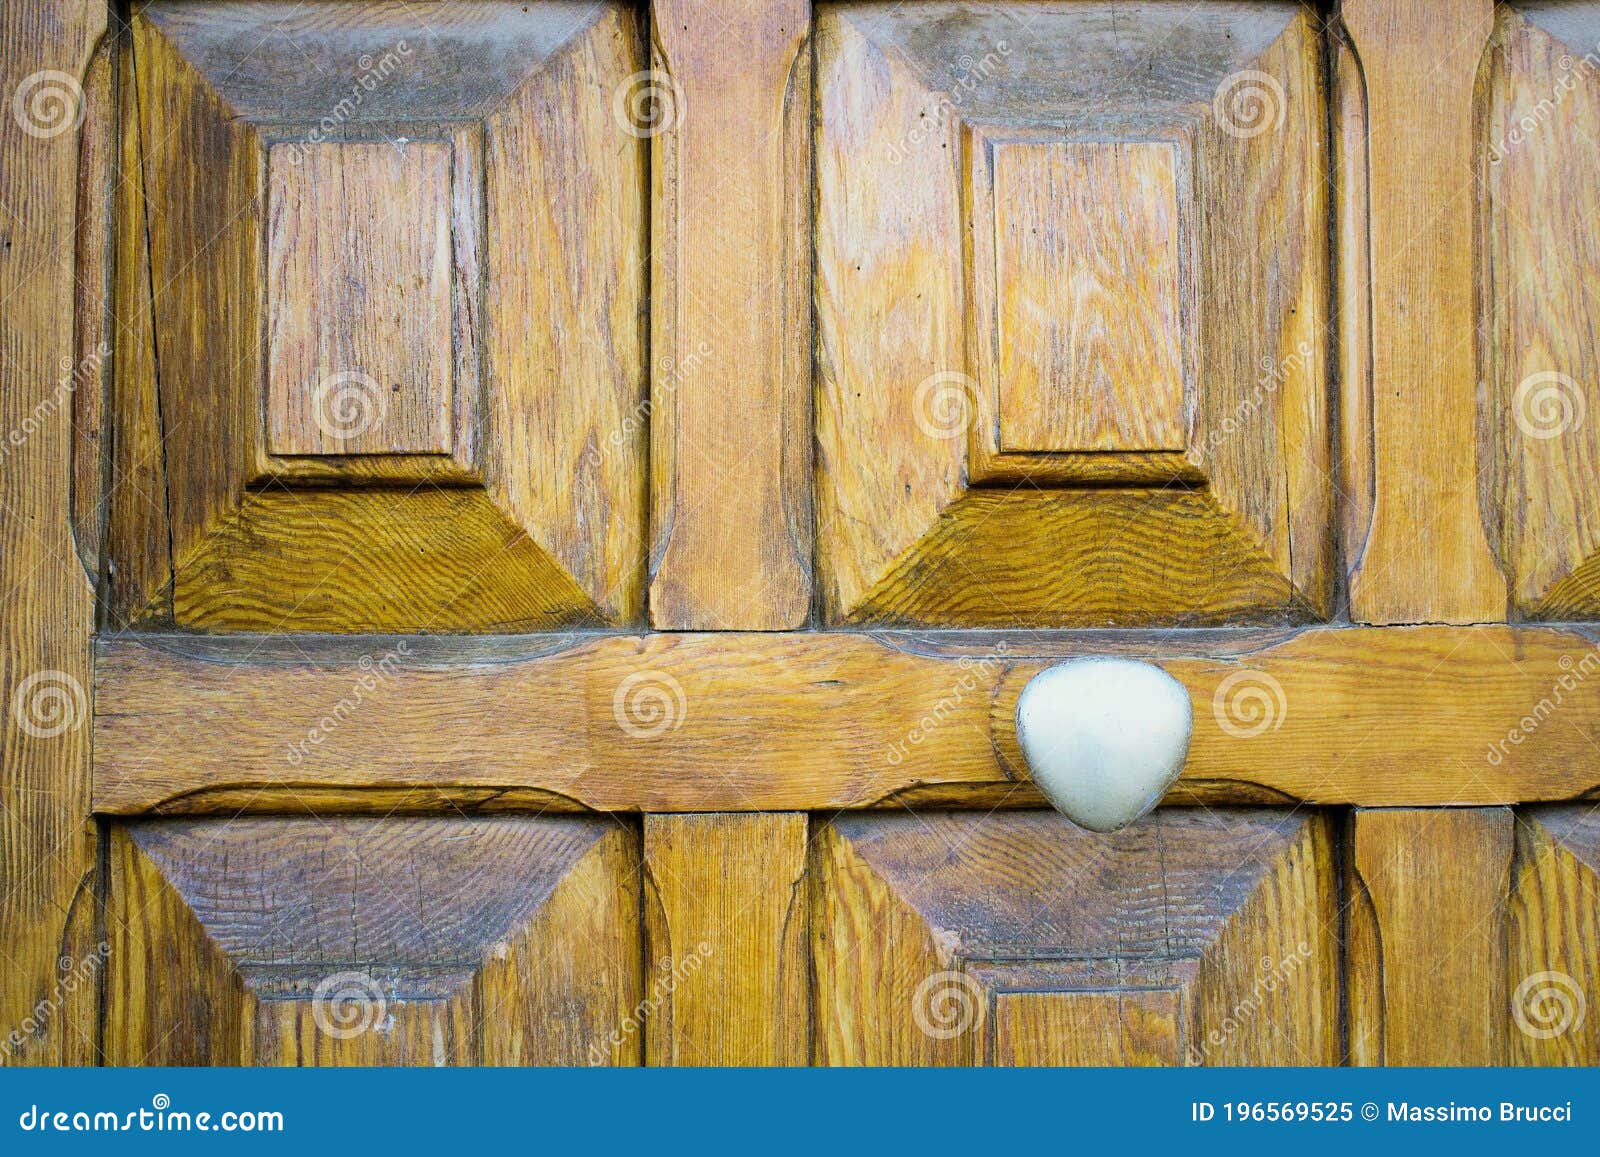 old wooden entrance door with handle